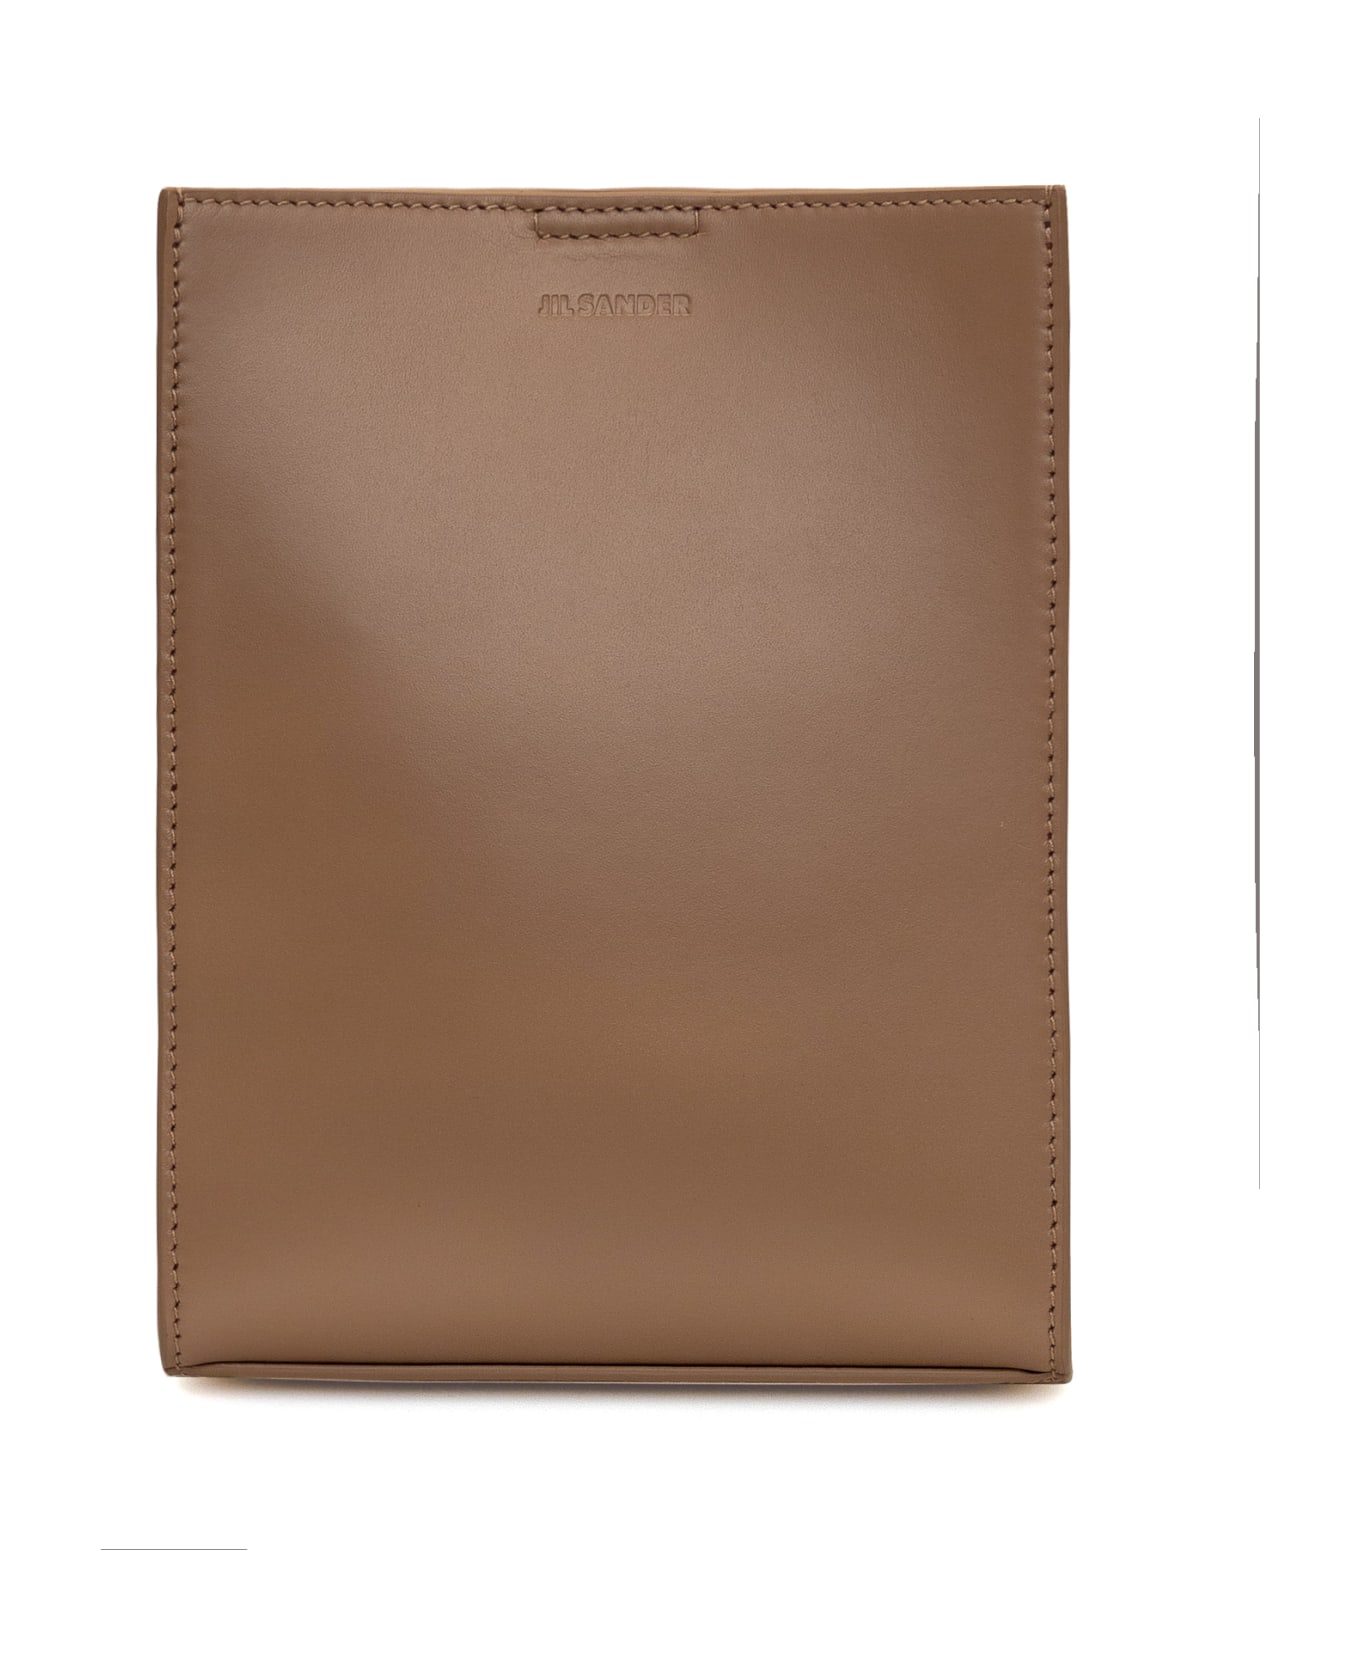 Jil Sander Tangle Bag In Beige Leather - Beige ショルダーバッグ